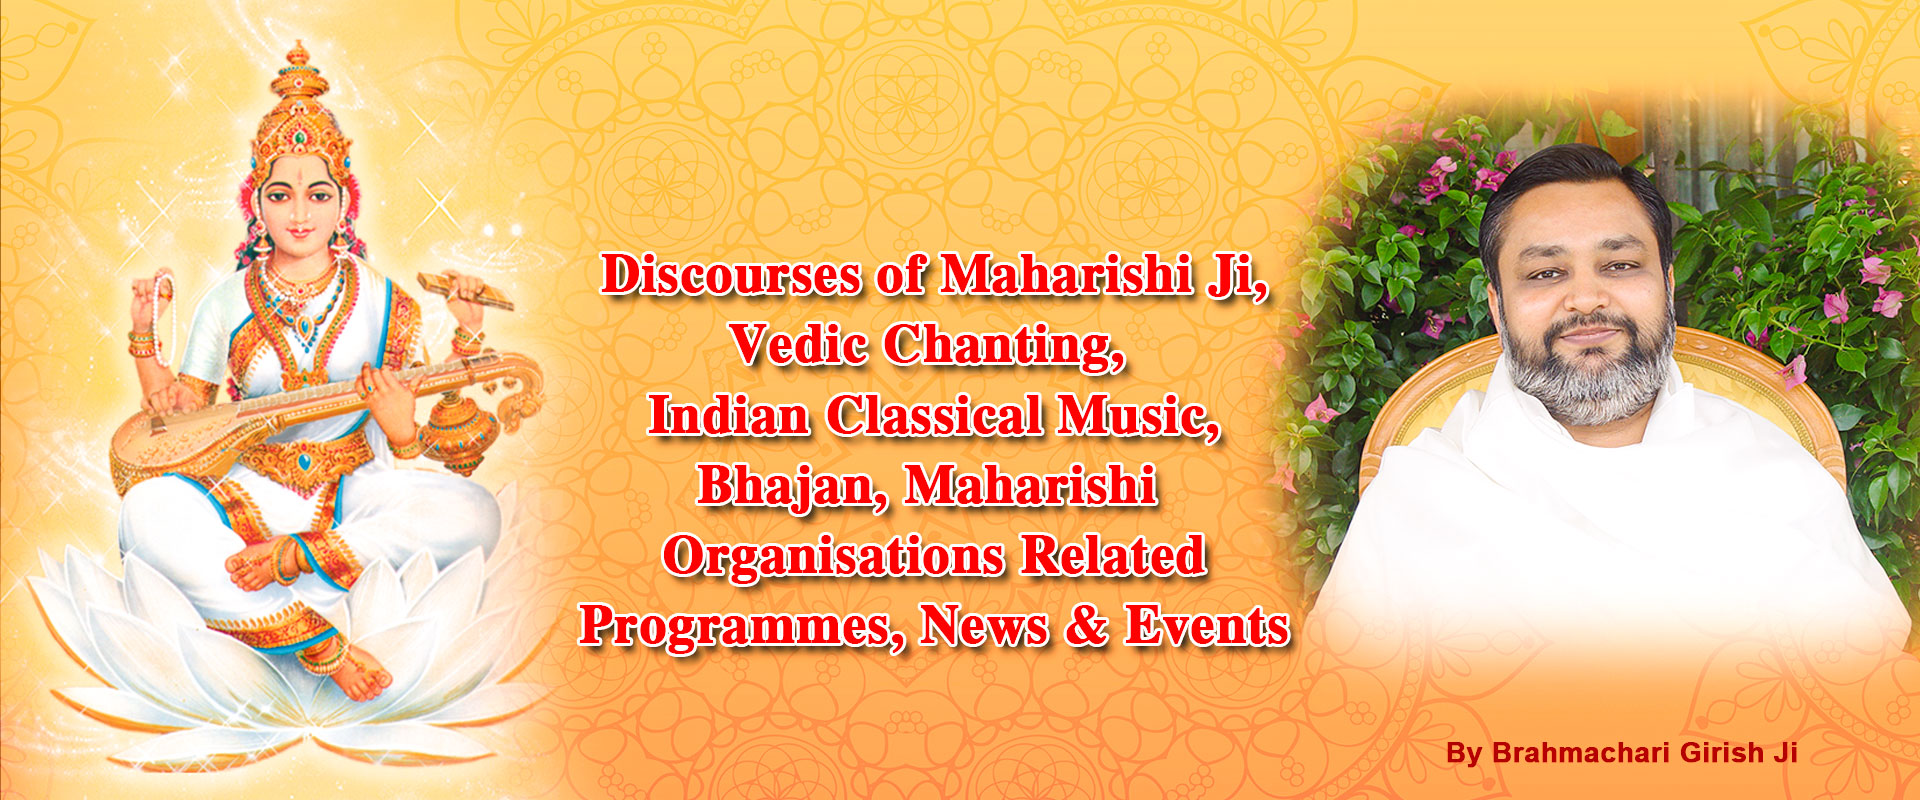 Dedicated to His Holiness Maharishi Mahesh Yogi Ji